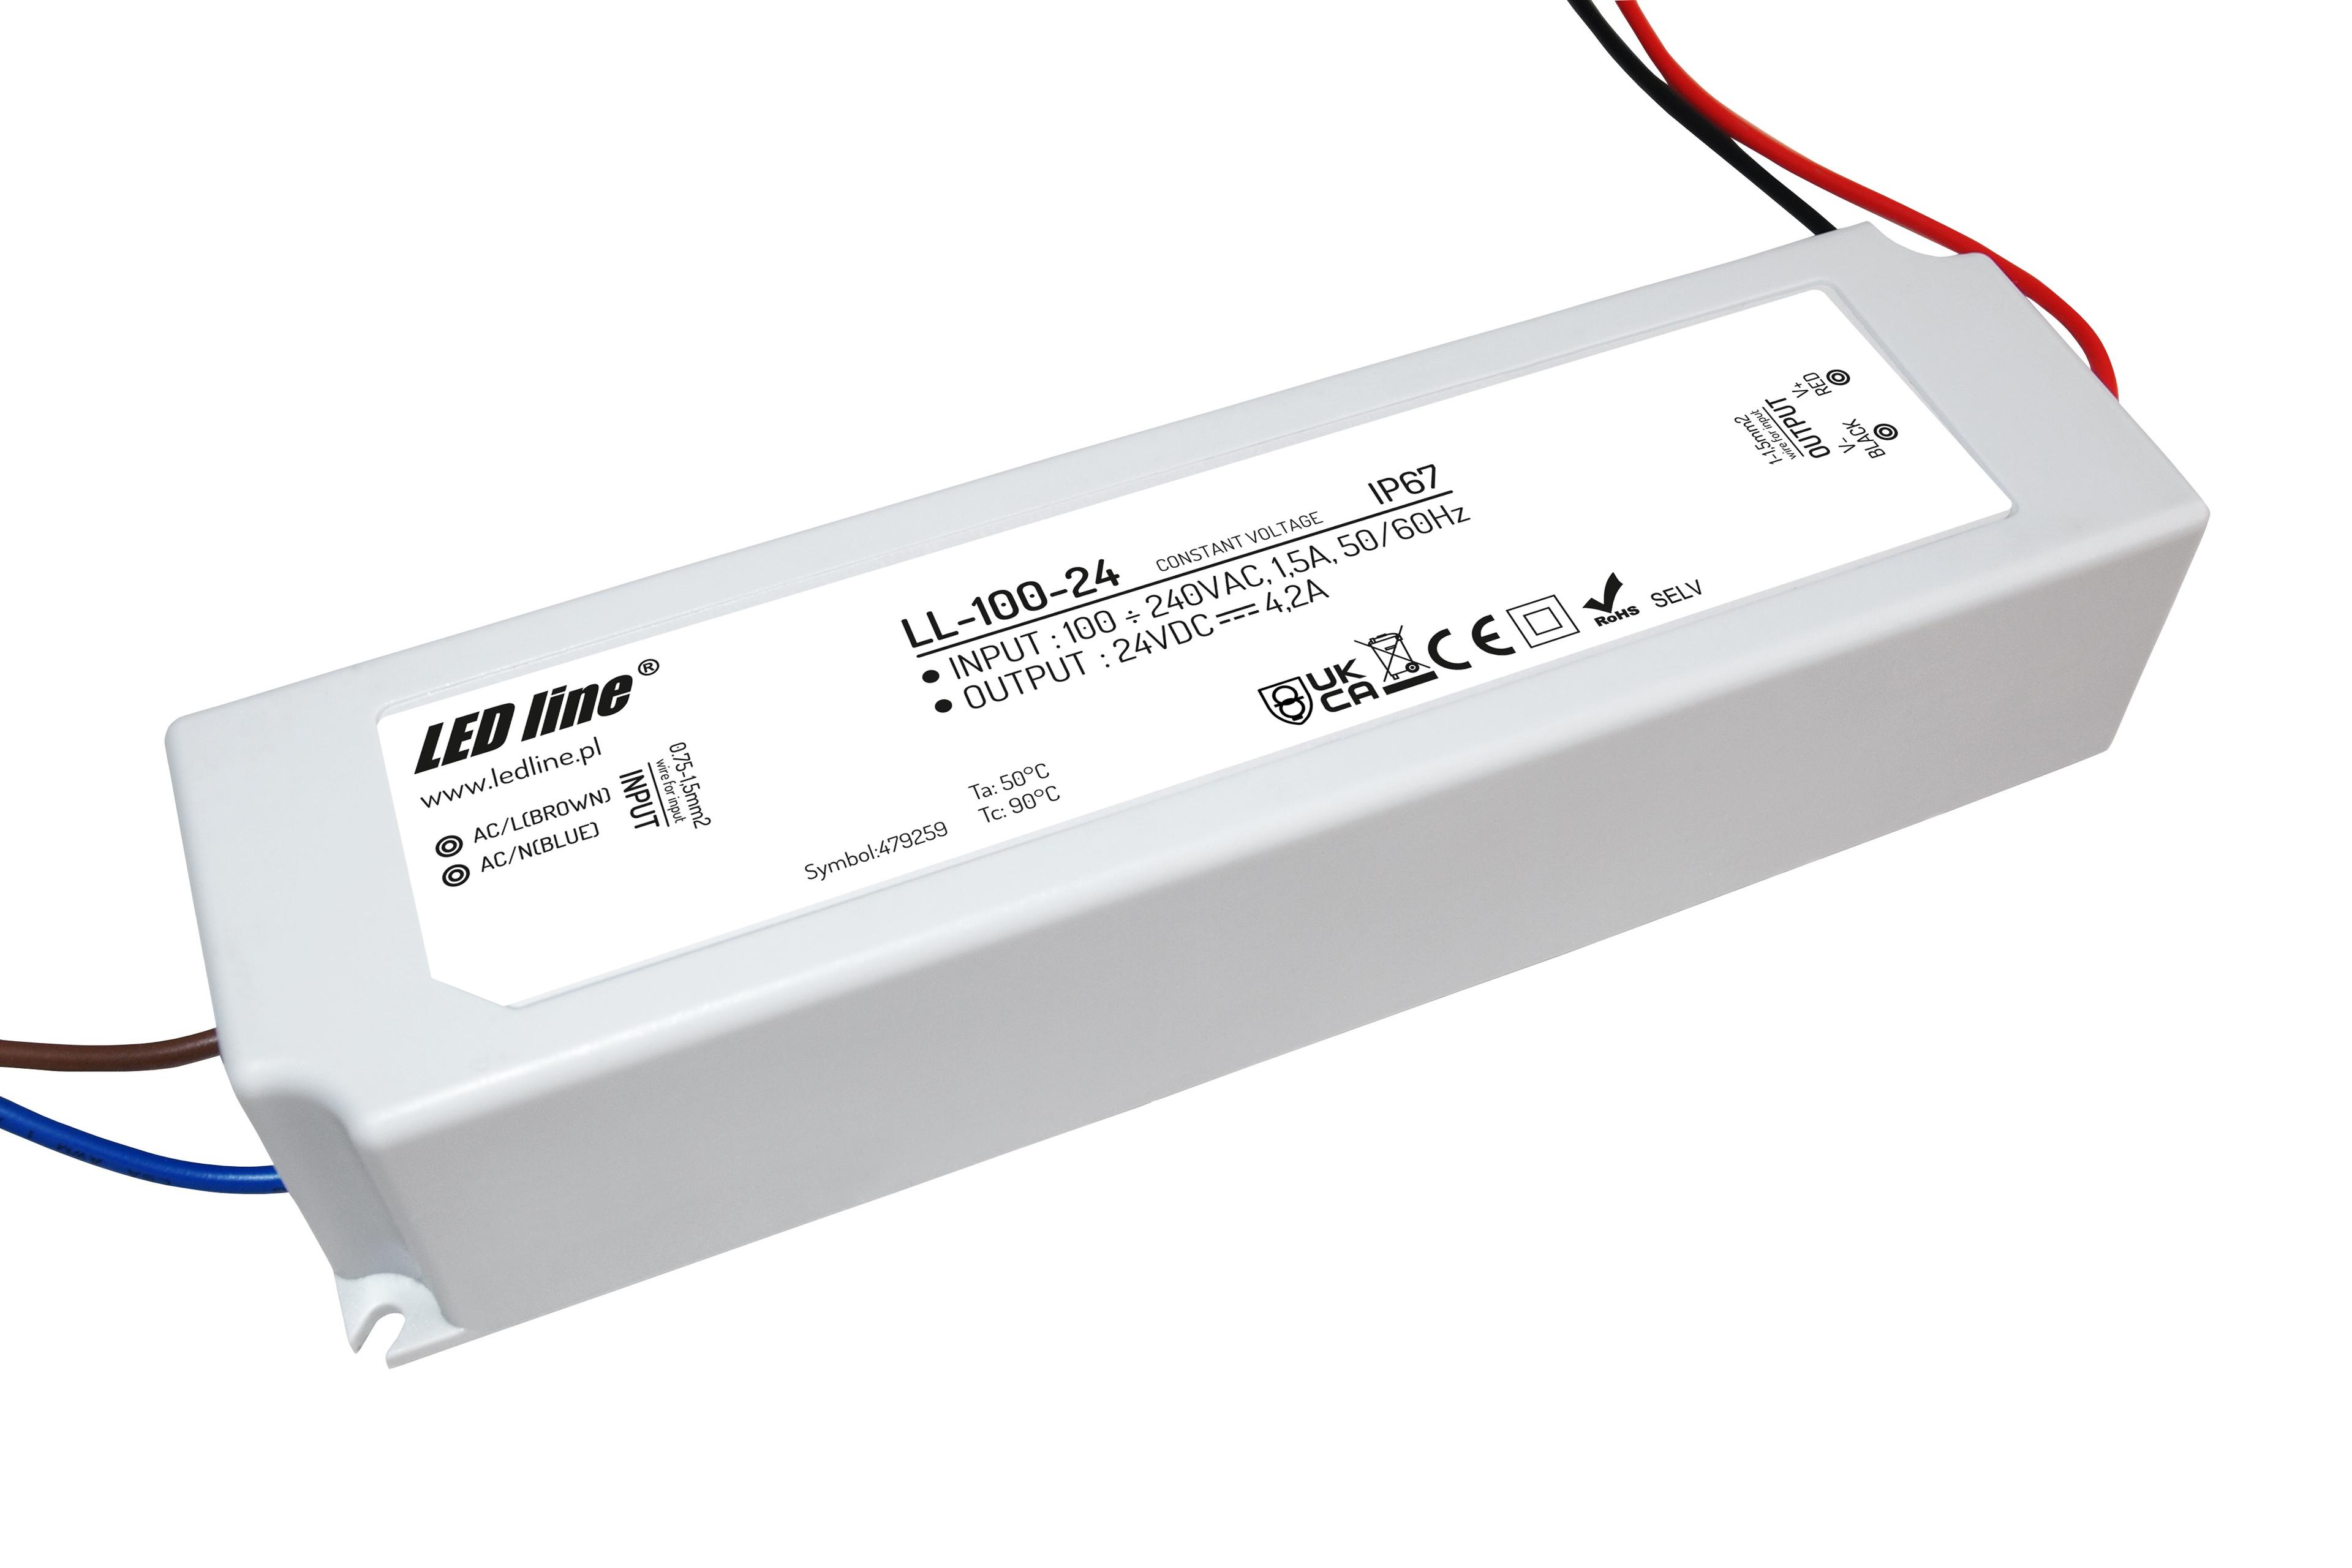 Zasilacz LED line 24V 100W 4,2A wodoodporny IP67 LL-100-24